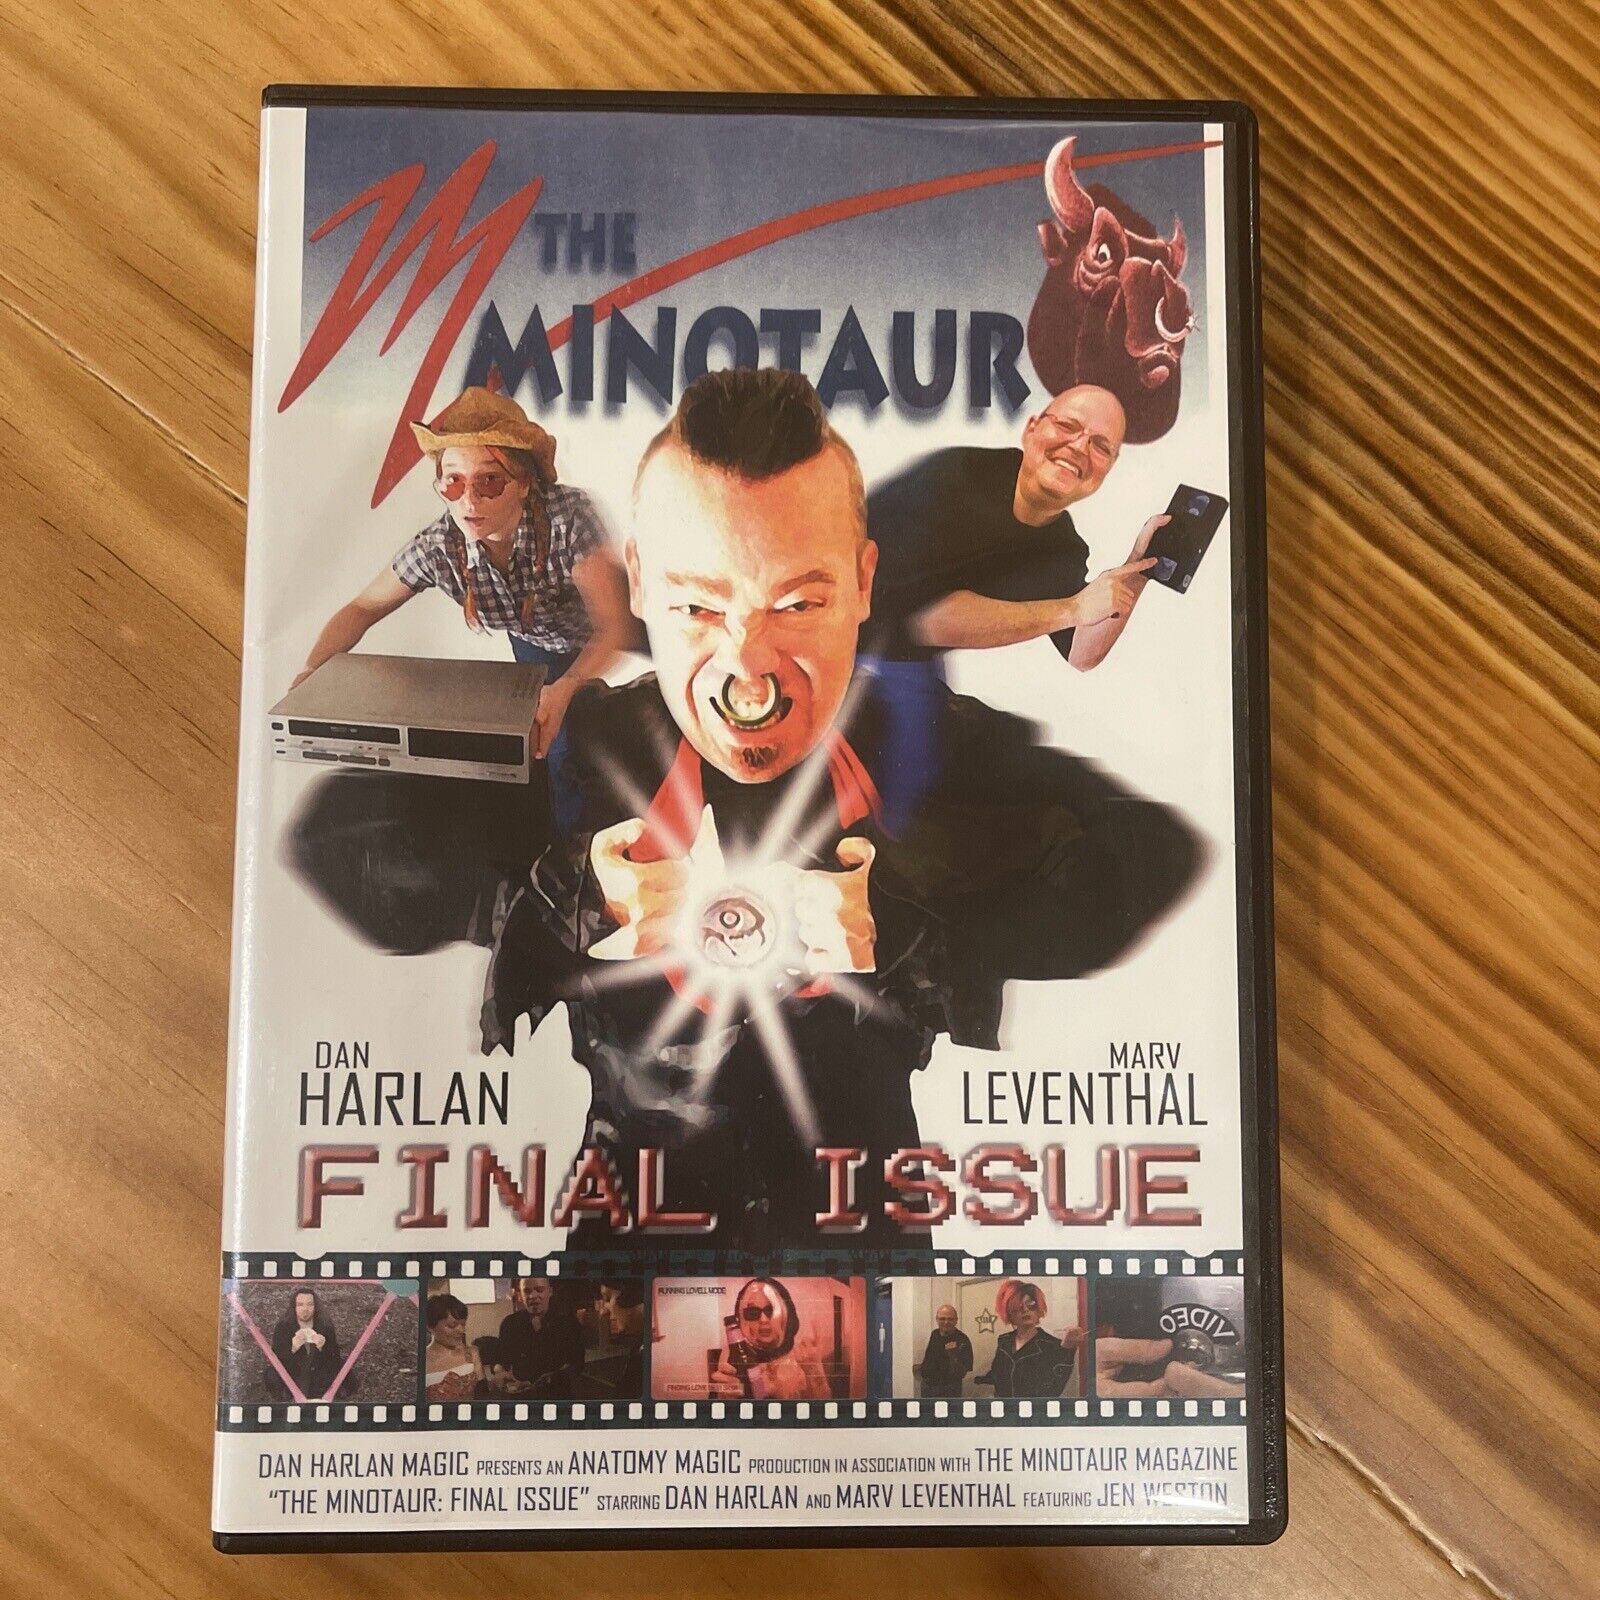 THE MINOTAUR by Dan Harlan & Marv Leventhal (2 DVD SET) Magic DVD - New*